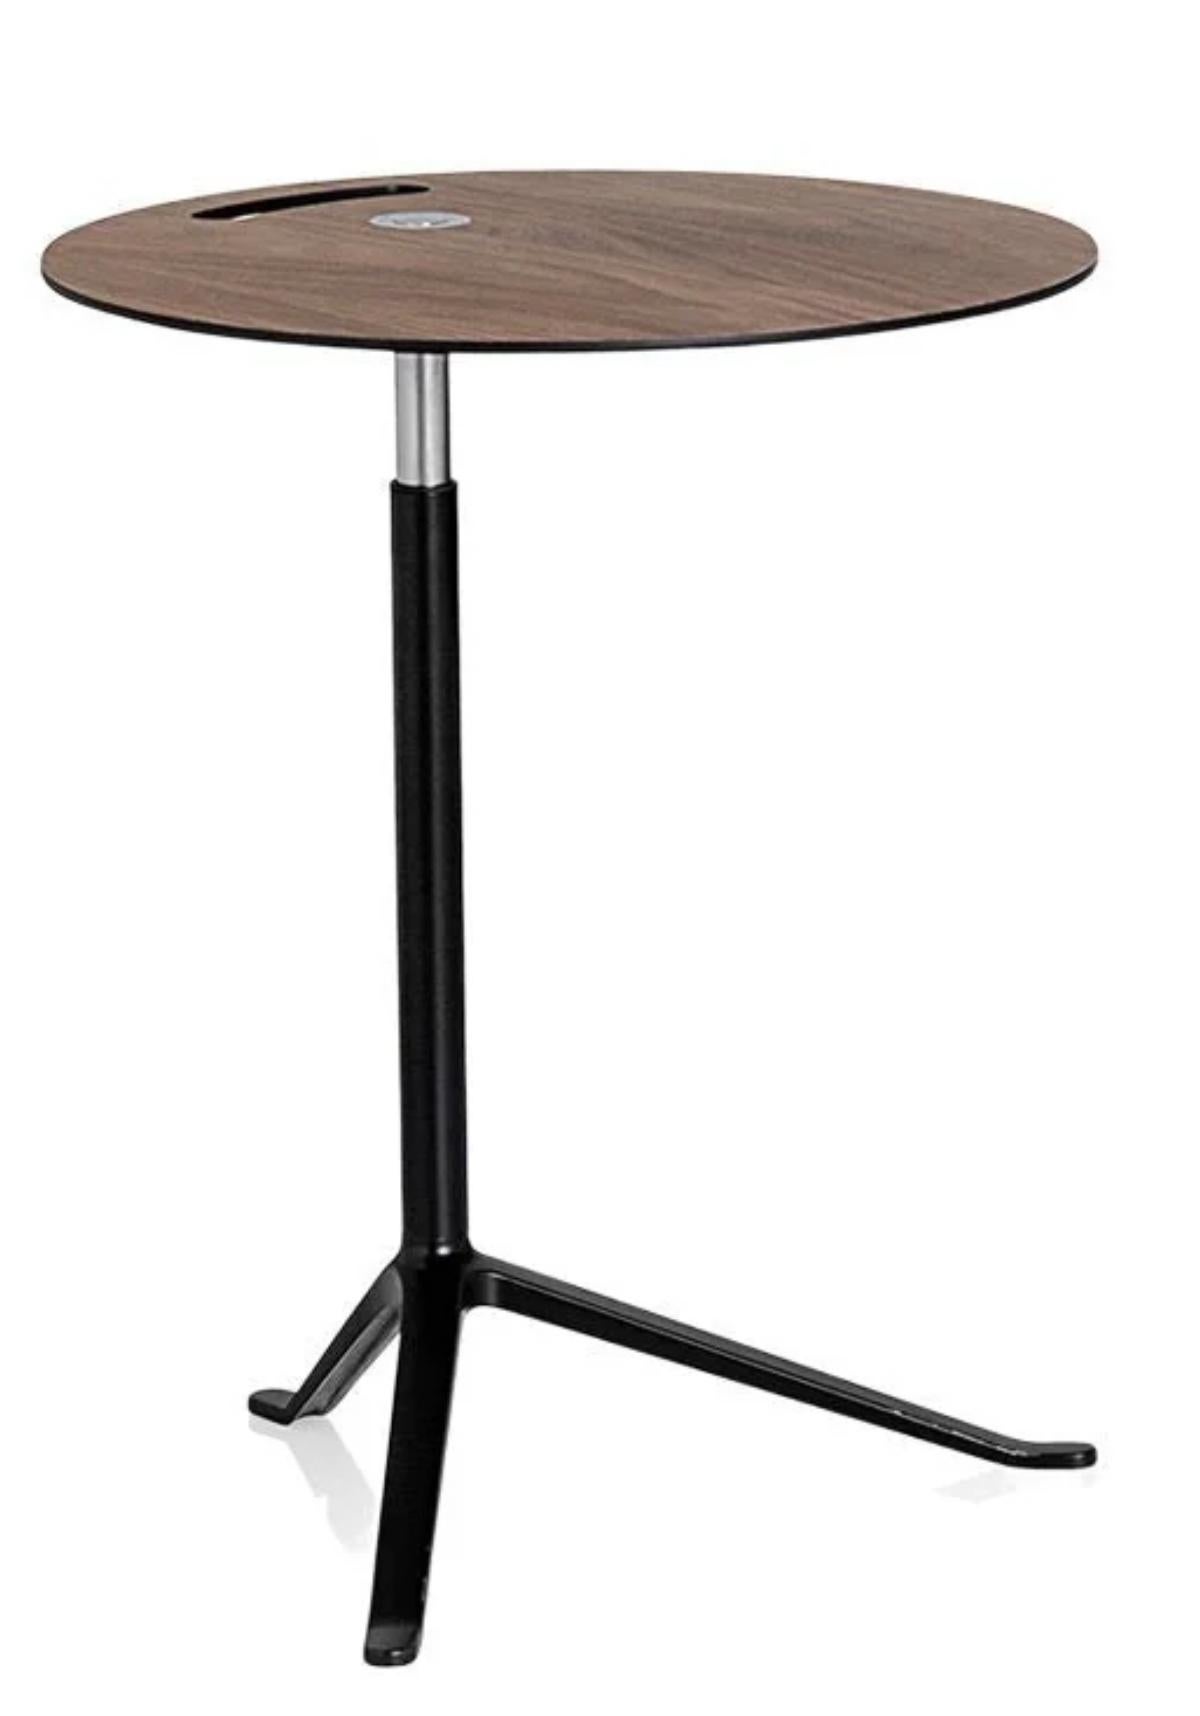 Contemporary Little Friend KS11 Height-Adjustable Table, Fritz Hansen, Walnut, Denmark. For Sale